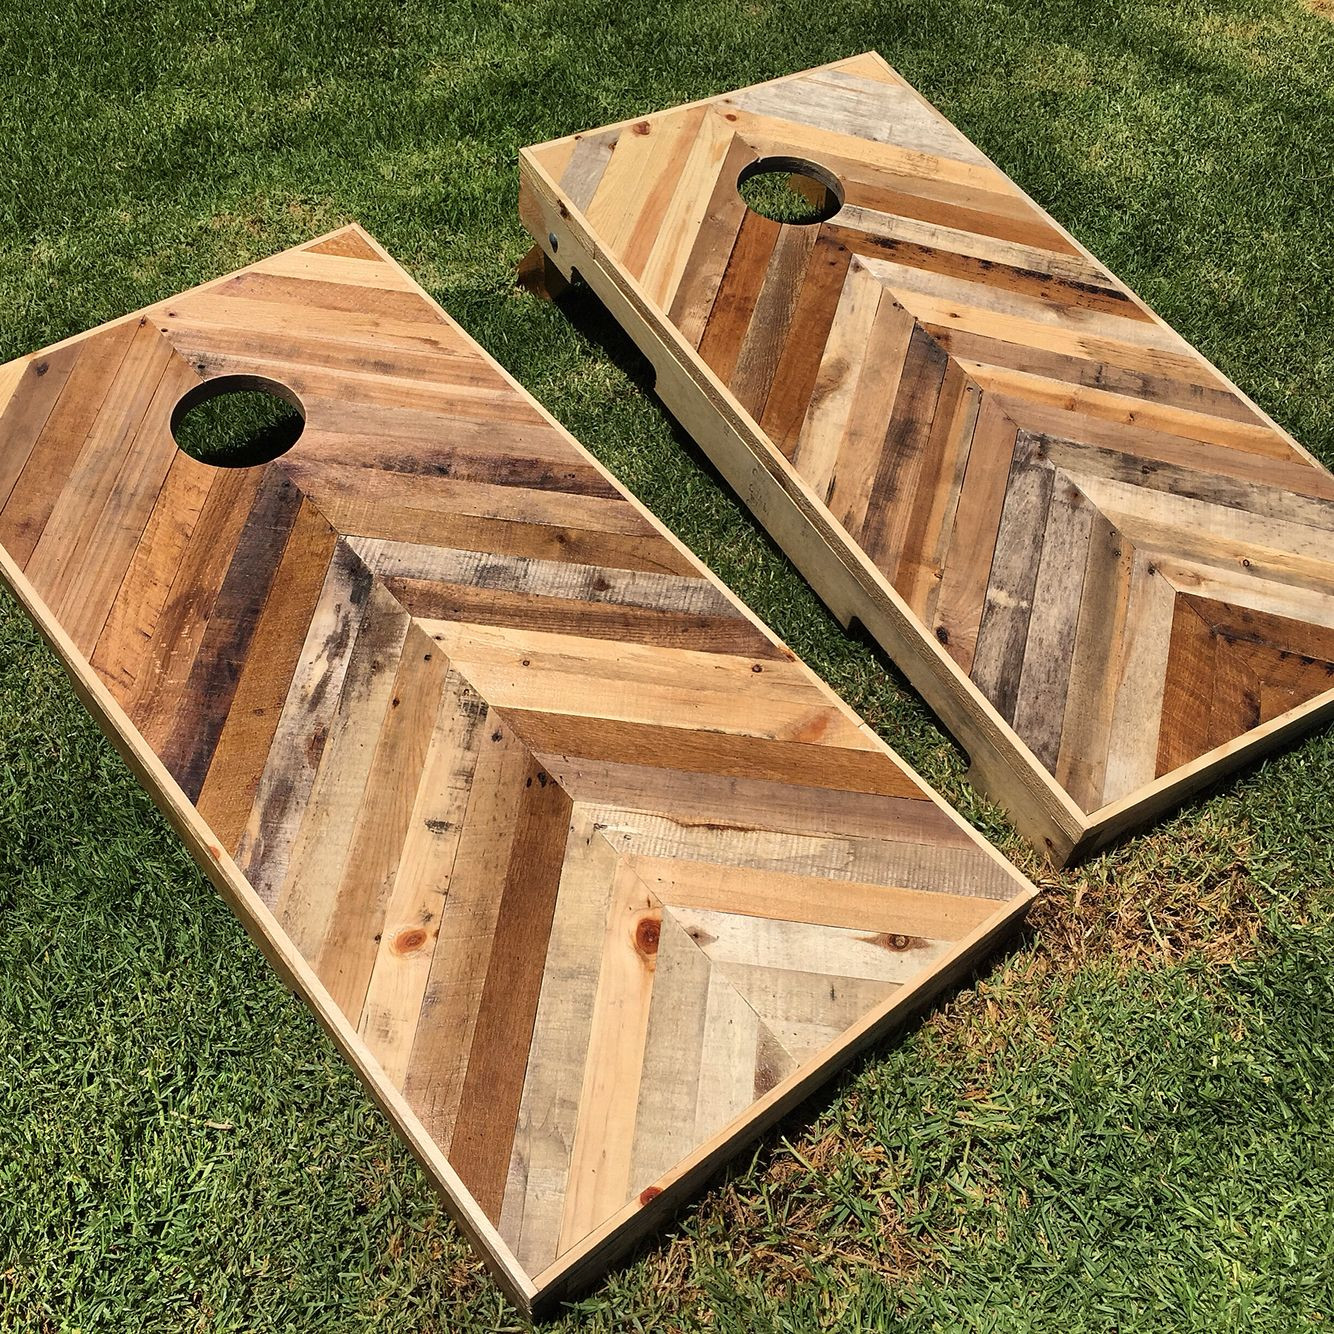 Best ideas about Cornhole Boards DIY
. Save or Pin DIY pallet chevron cornhole boards Follow me on Instagram Now.